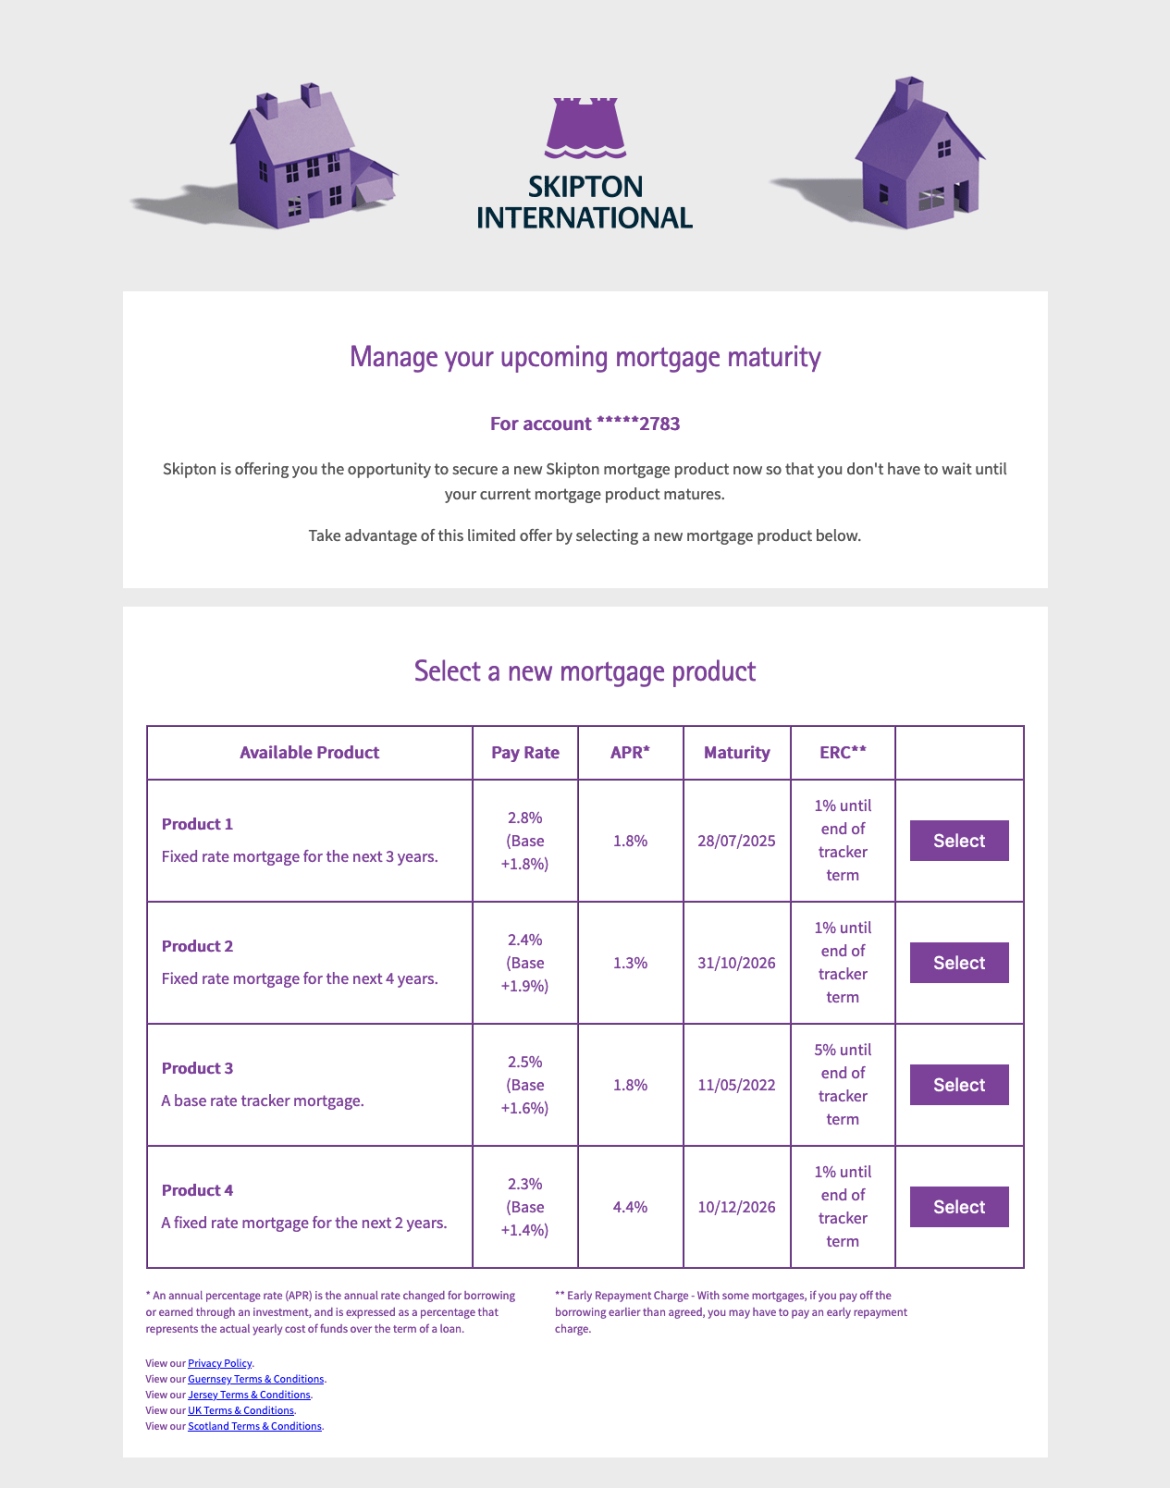 Skipton International - Mortgage Maturity Management Image 5